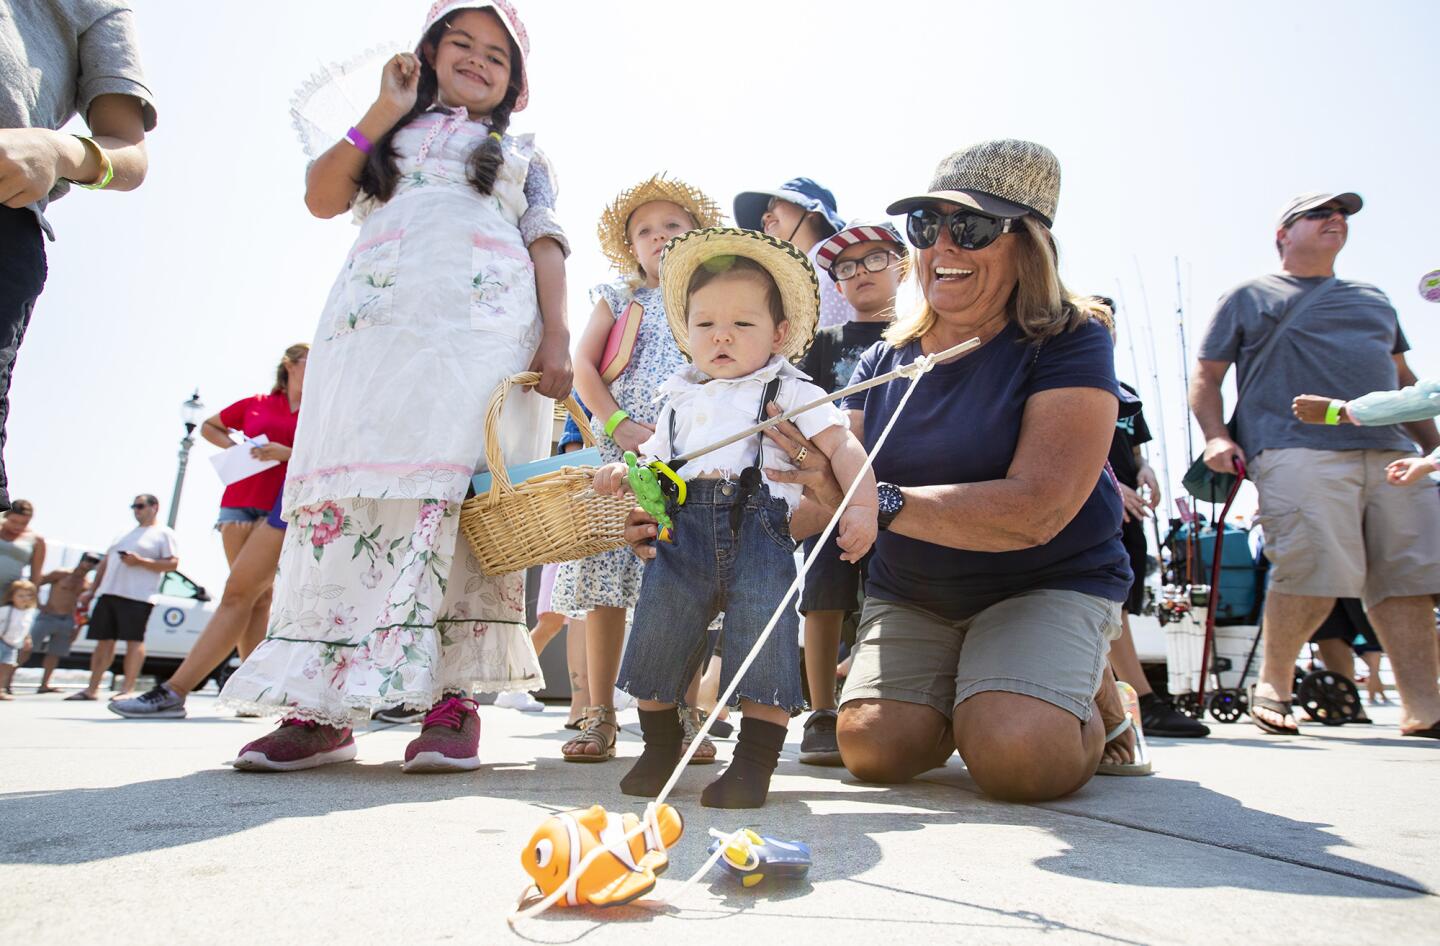 Photo Gallery: The 55th annual Huck Finn Fishing Derby